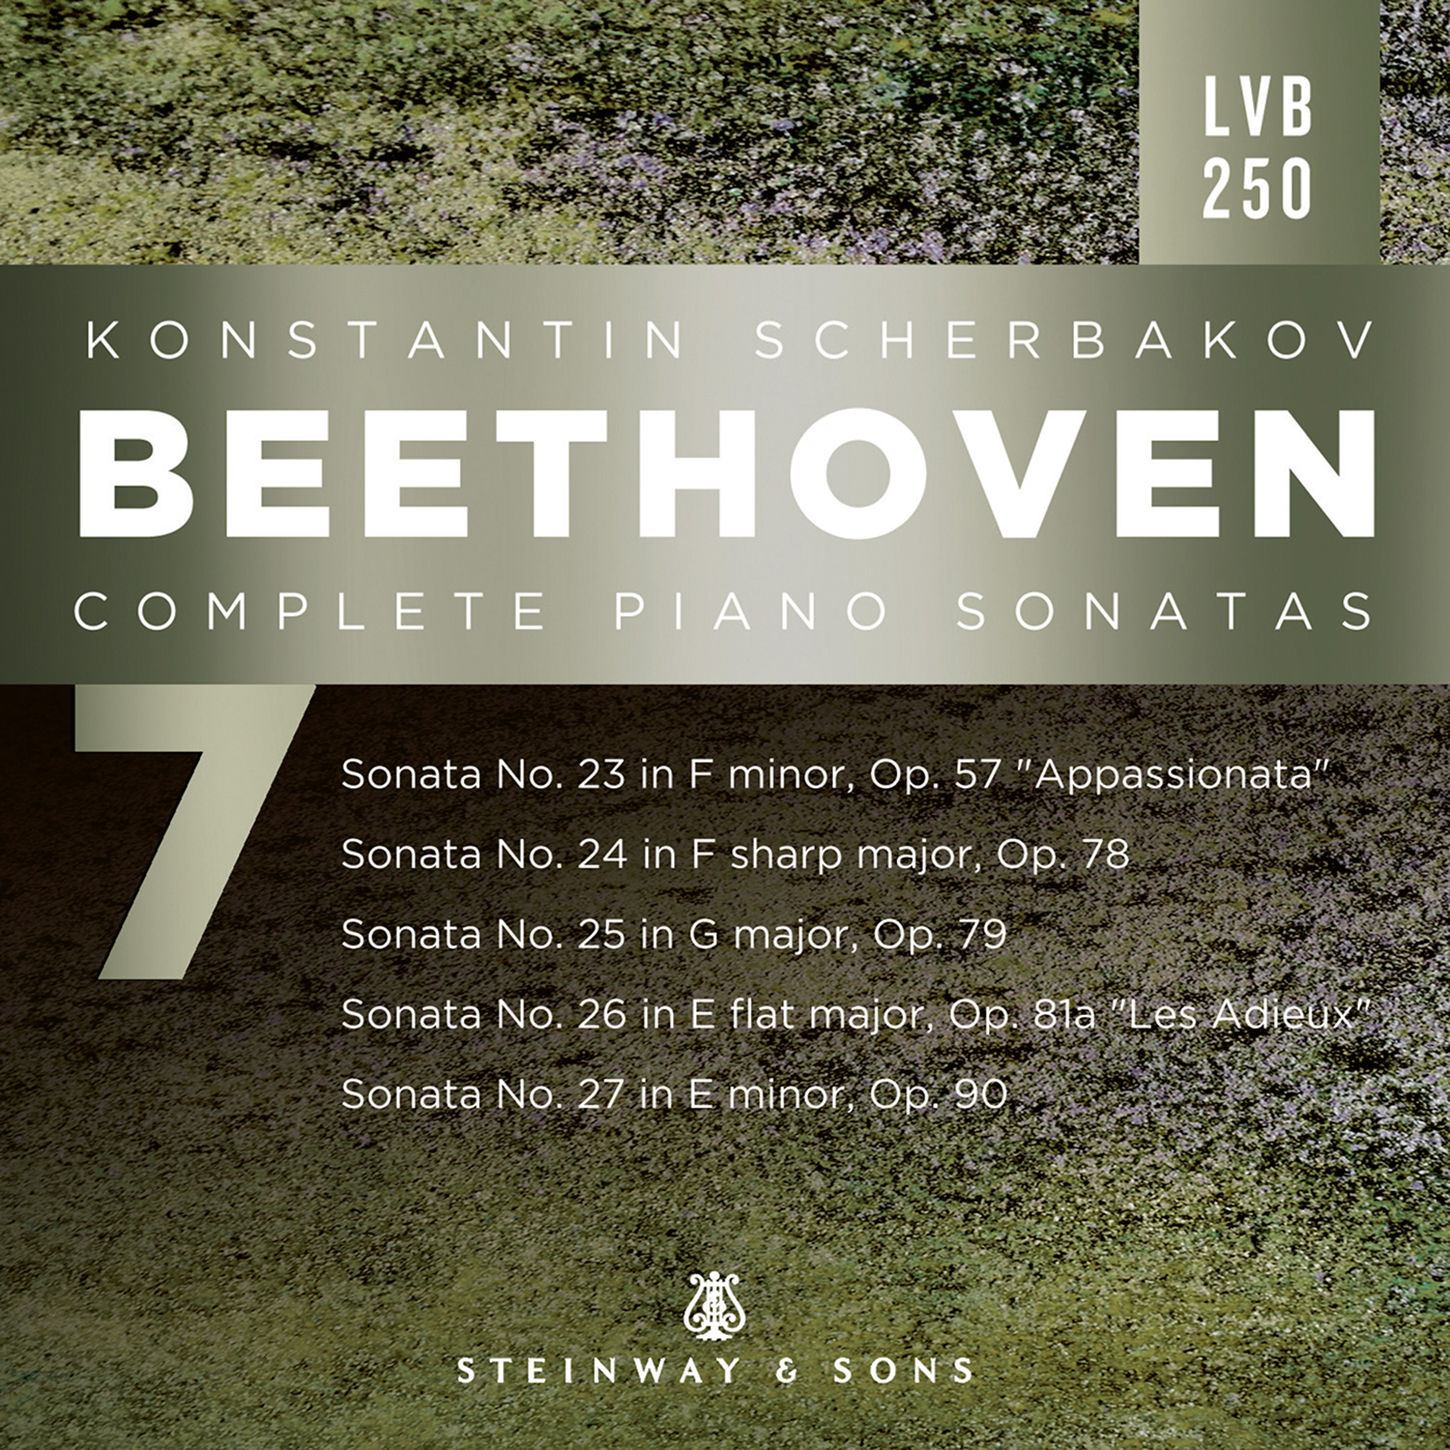 Konstantin Scherbakov – Beethoven Complete Piano Sonatas, Vol. 7 (2020) [FLAC 24bit/96kHz]